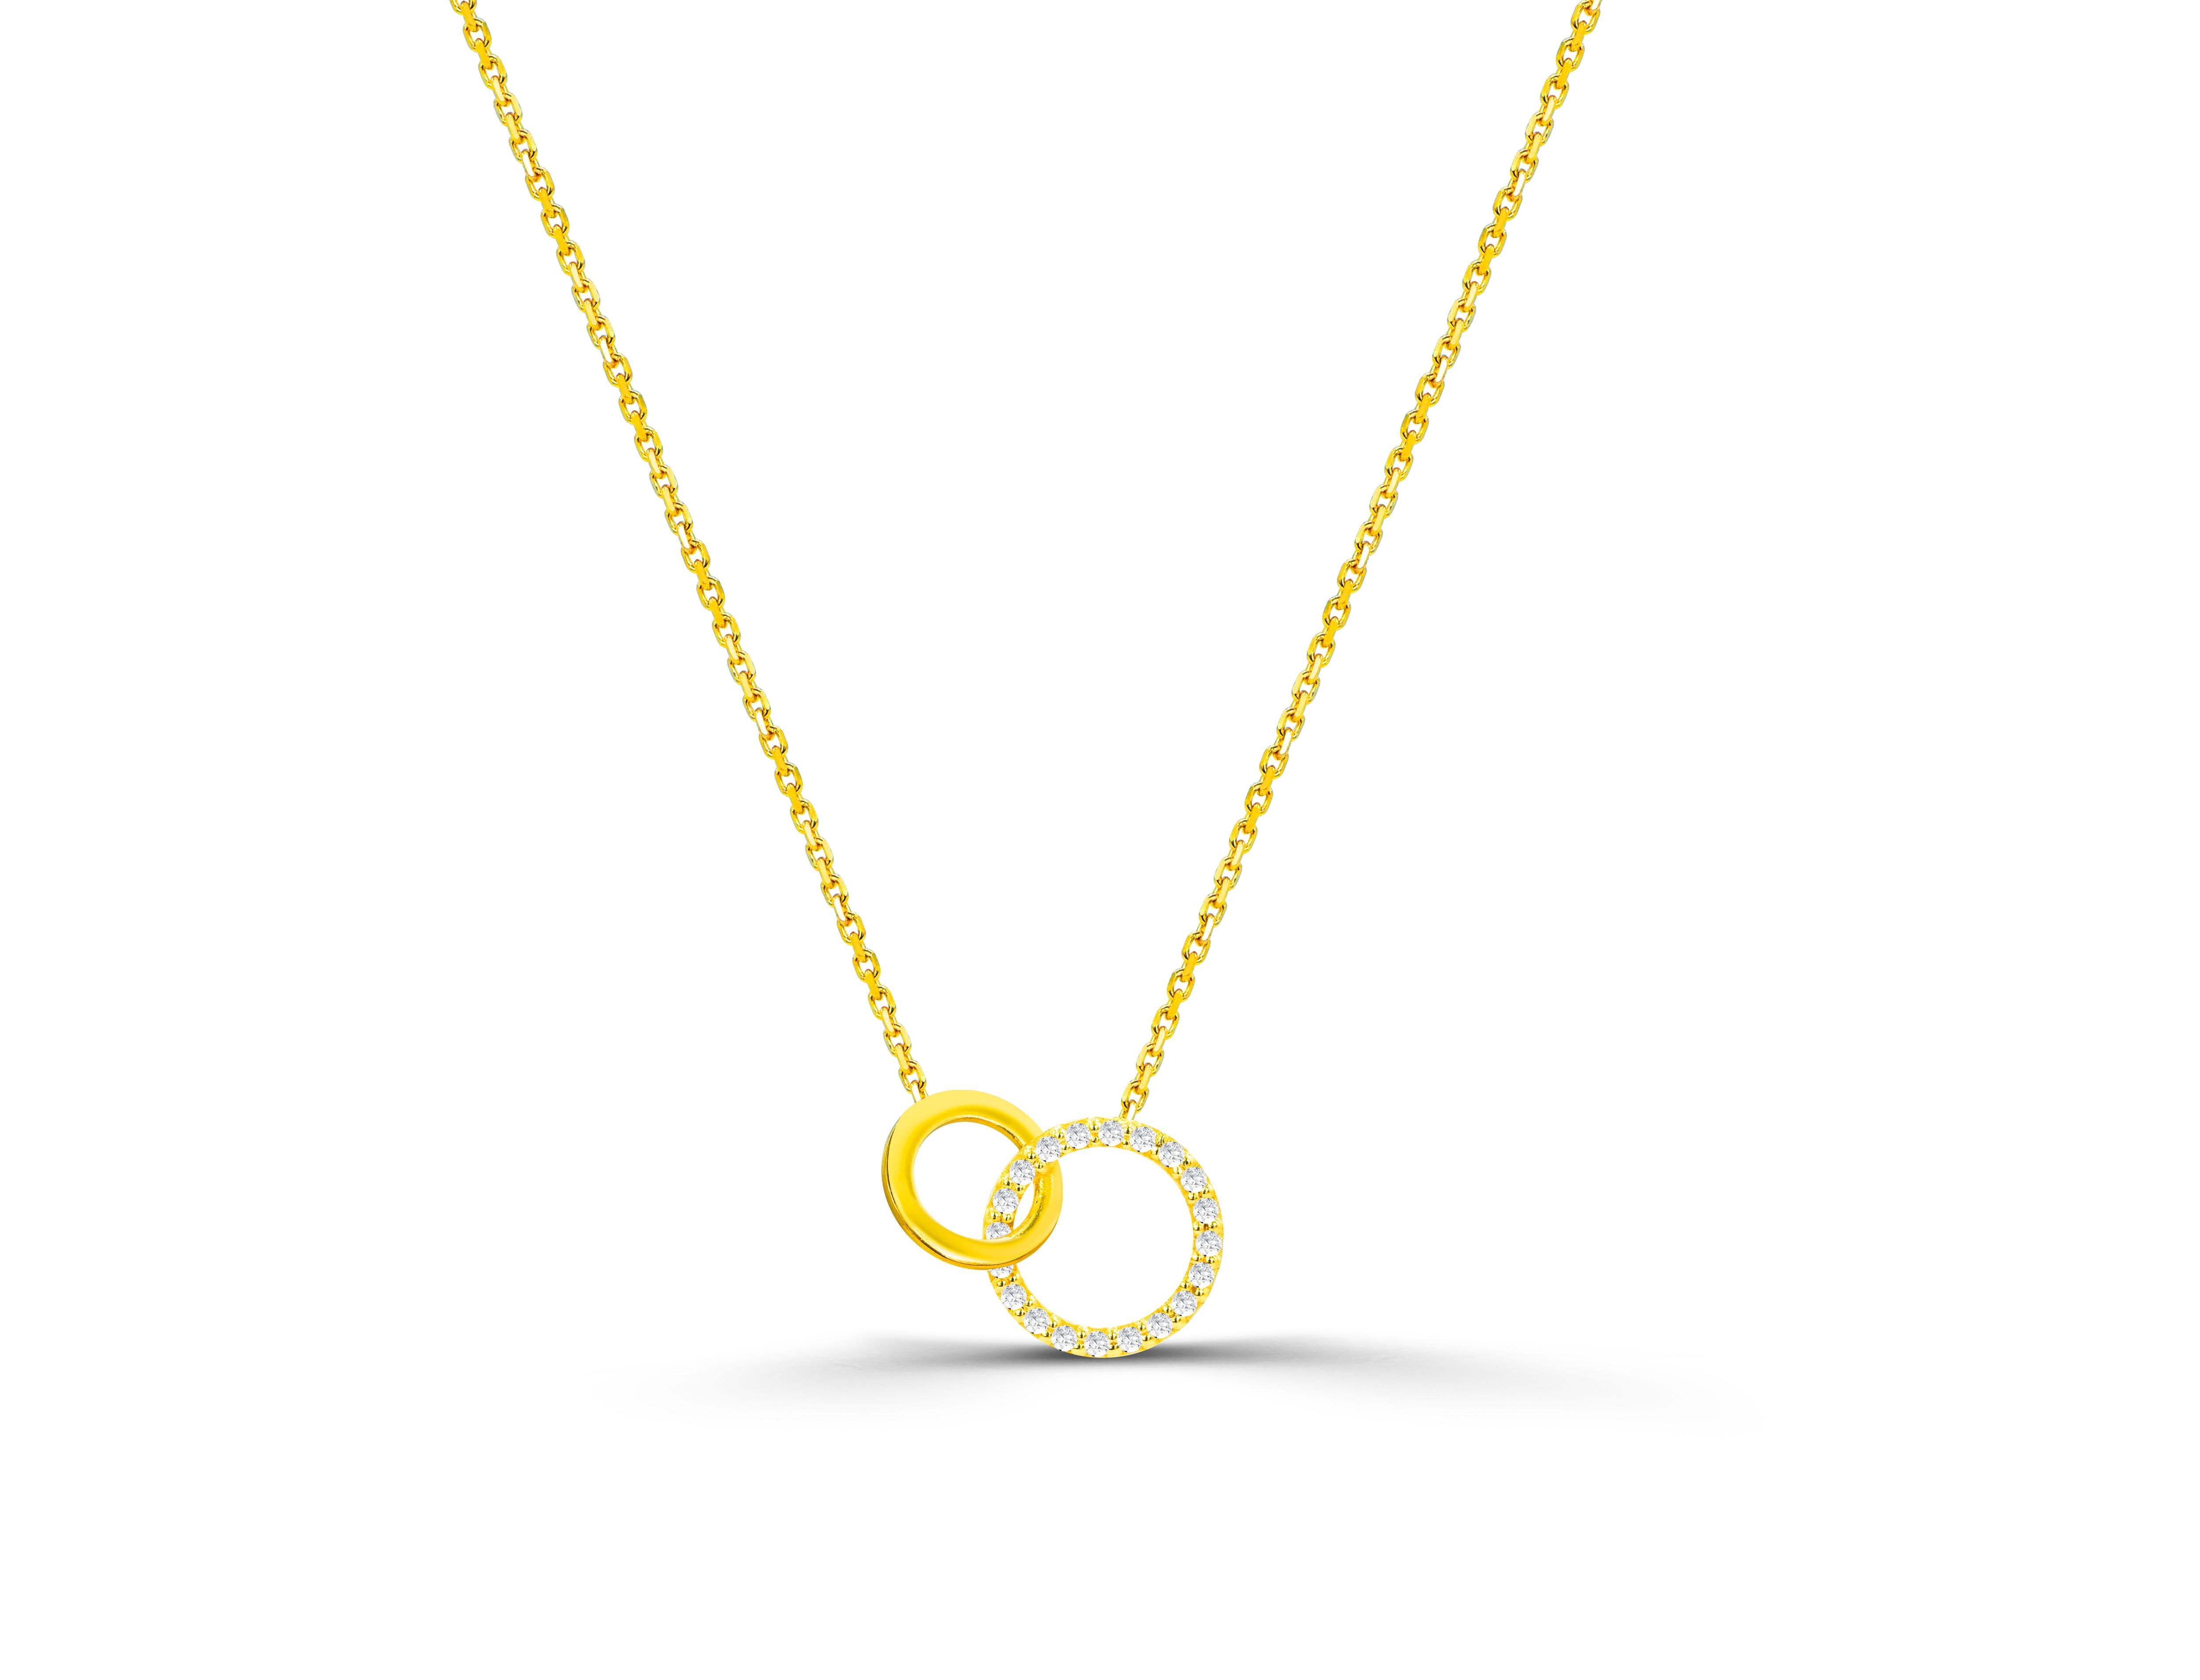 interlocking rings necklace gold